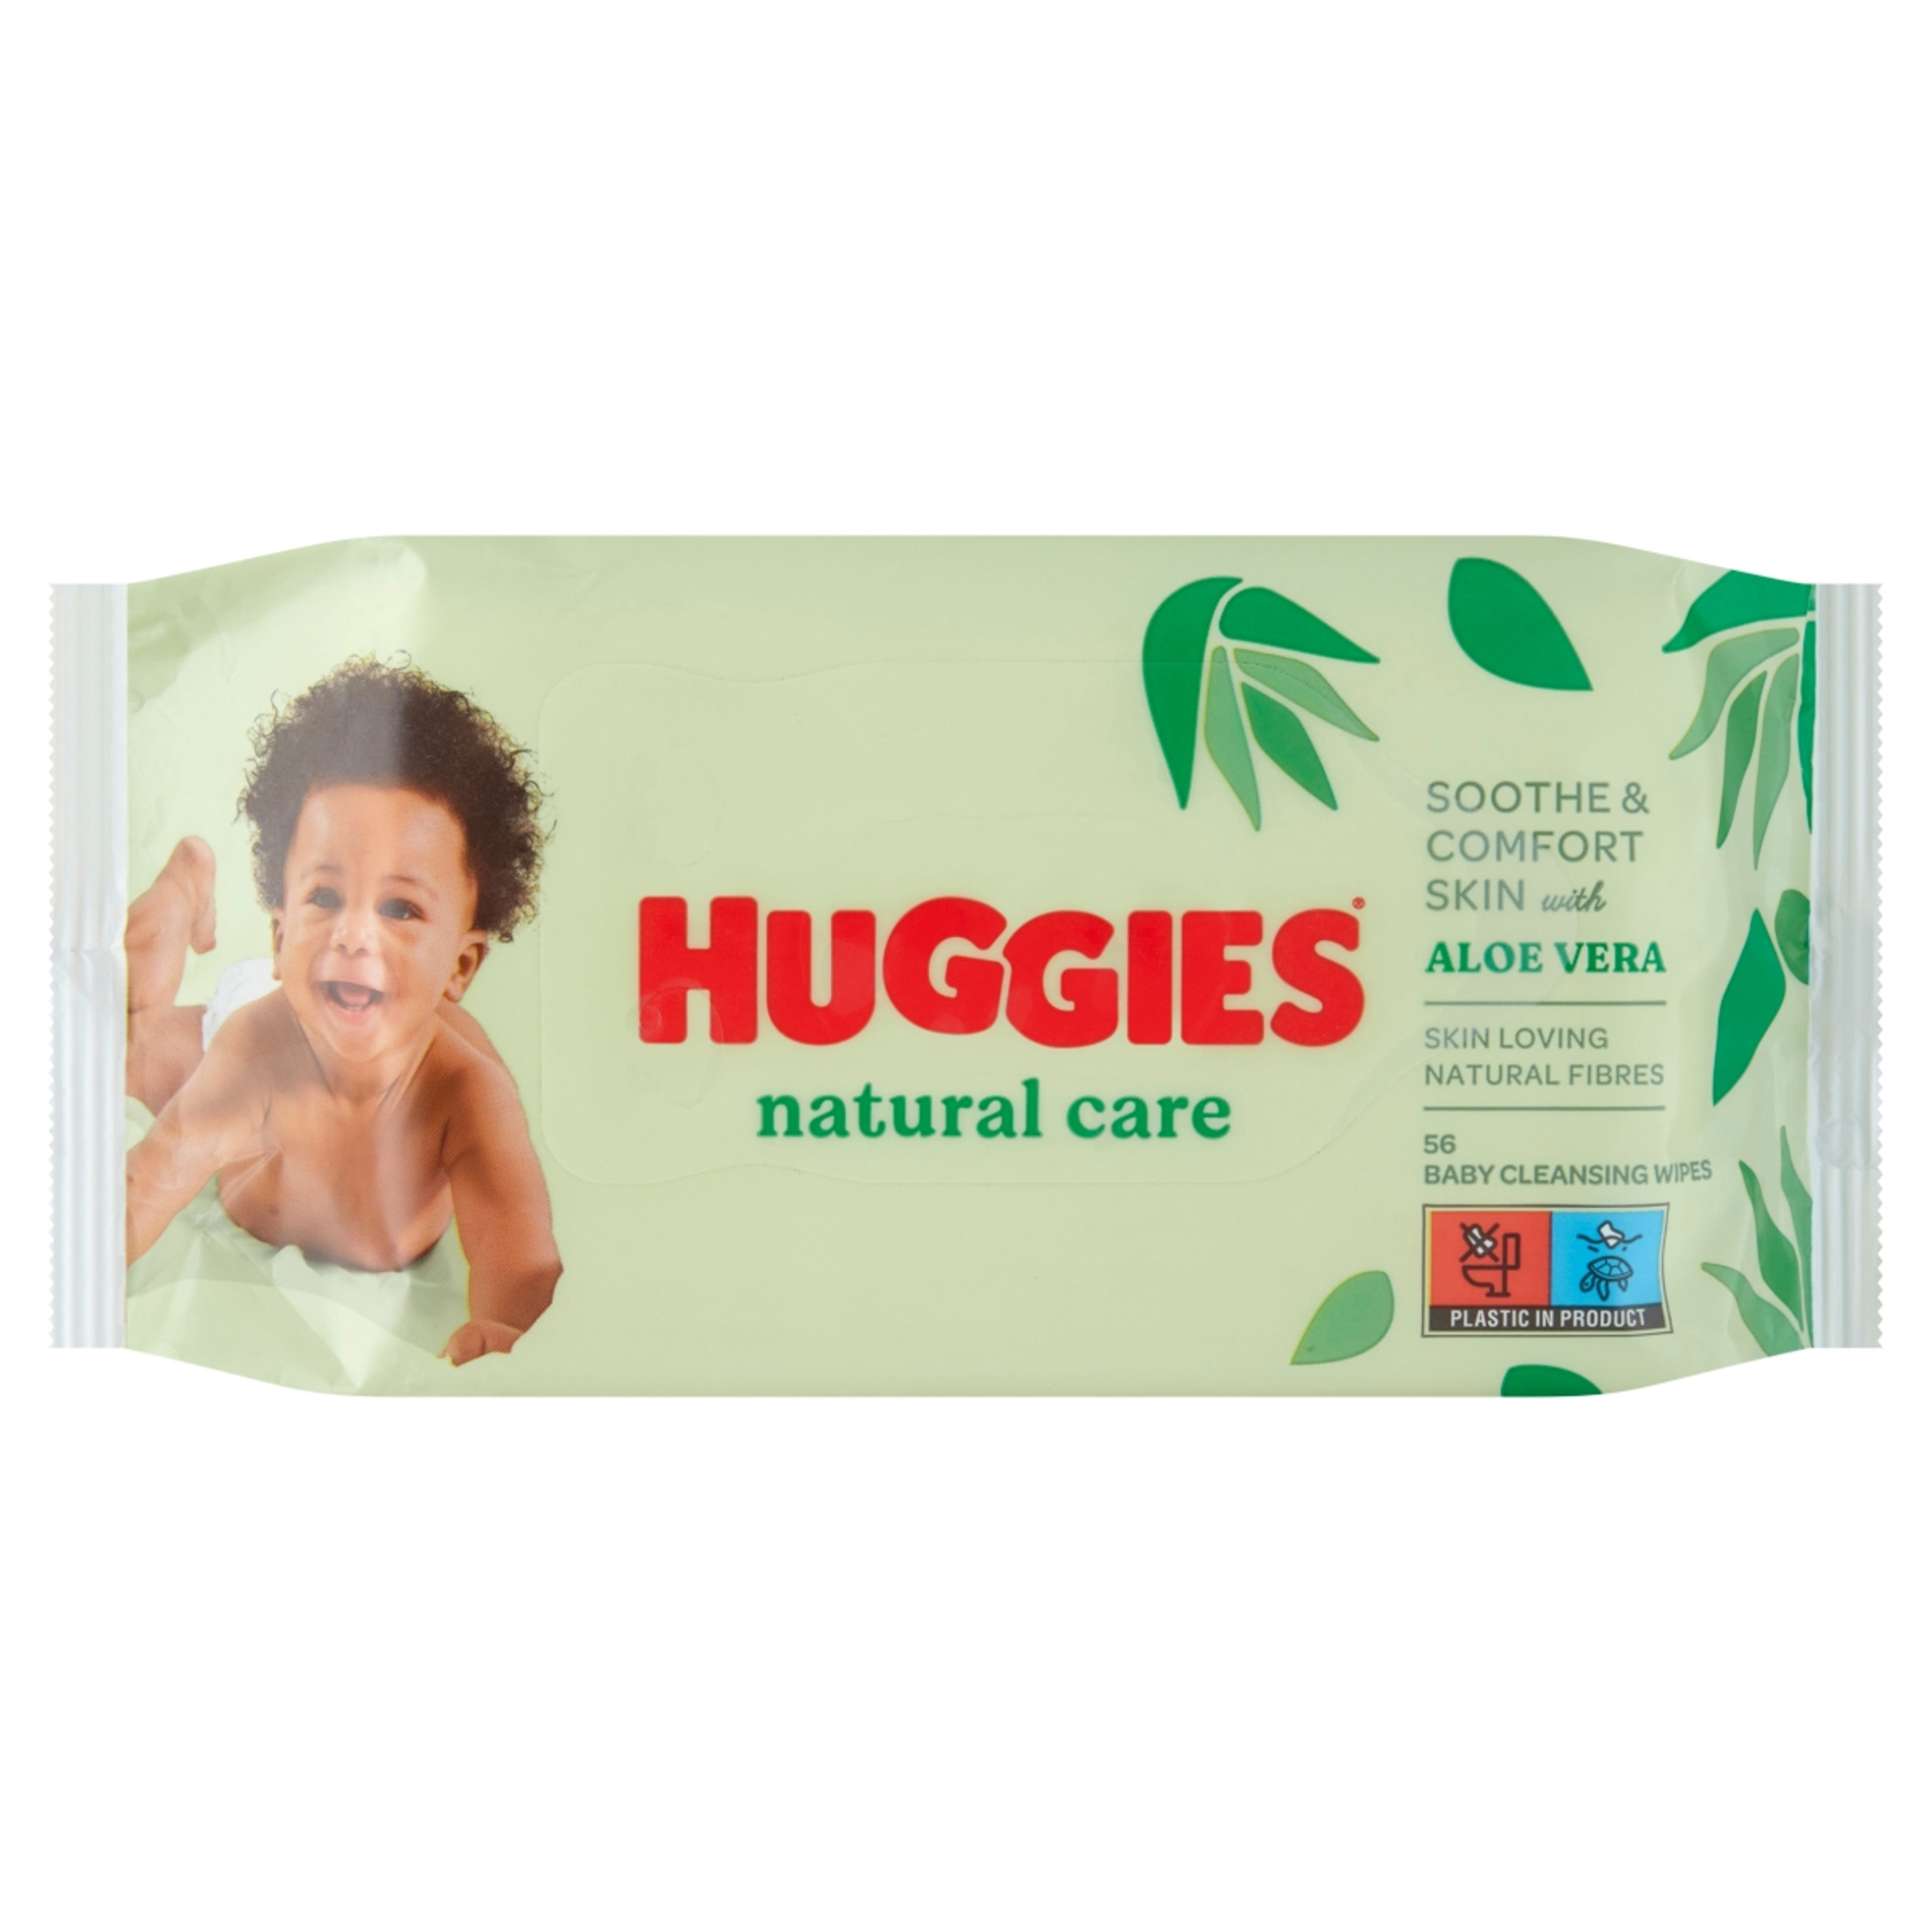 Huggies Natural Care baba törlőkendő - 56 db